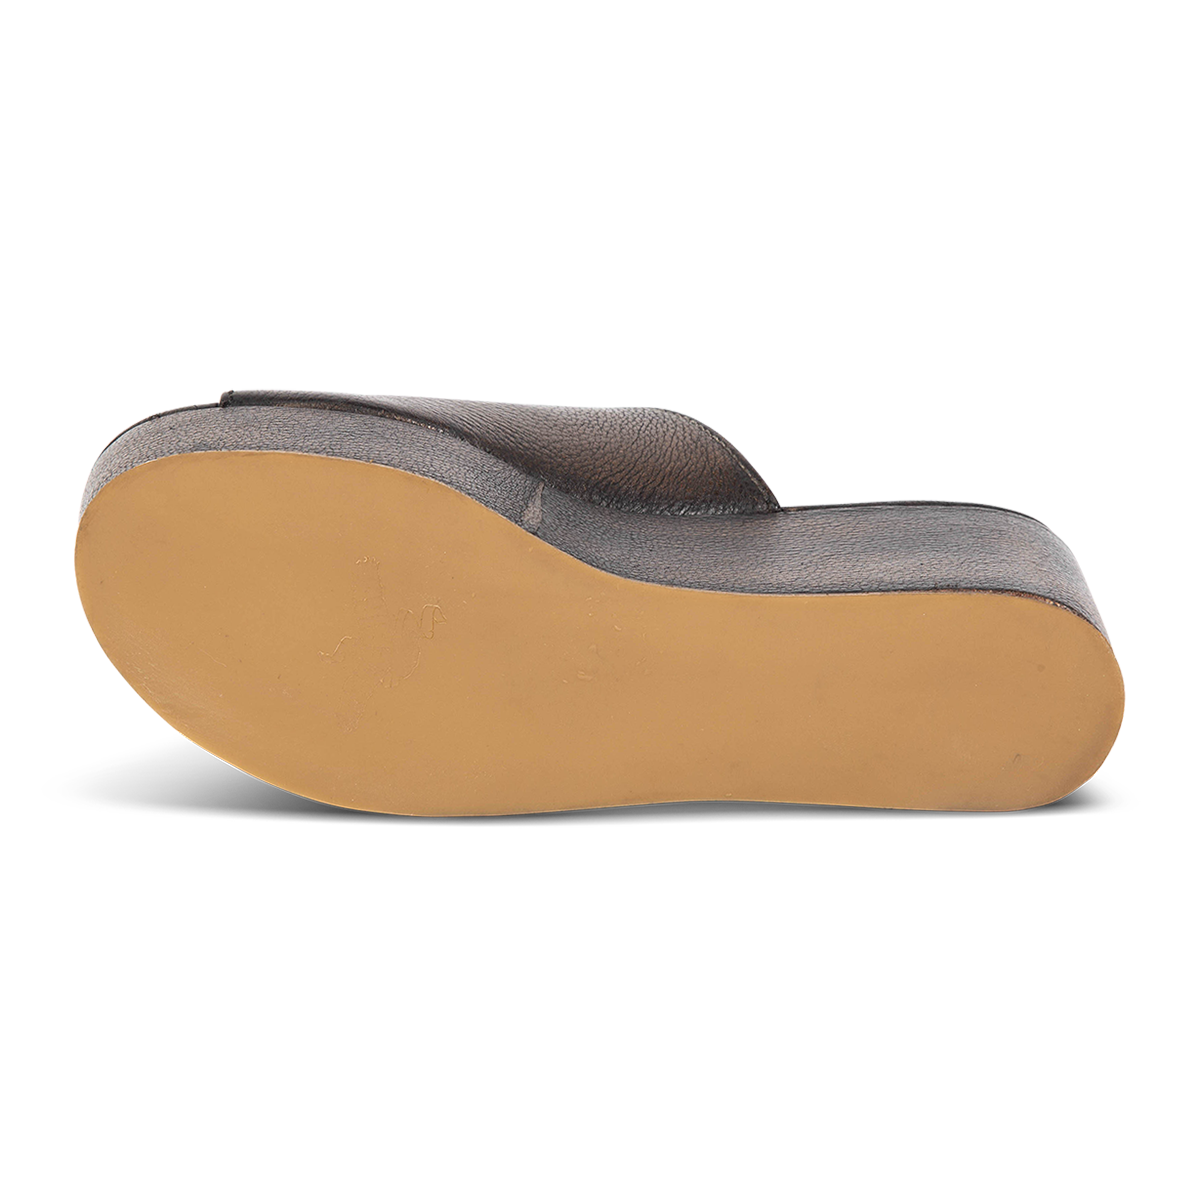 Rubber sole imprinted with FREEBIRD on women's Loveland black platform sandal